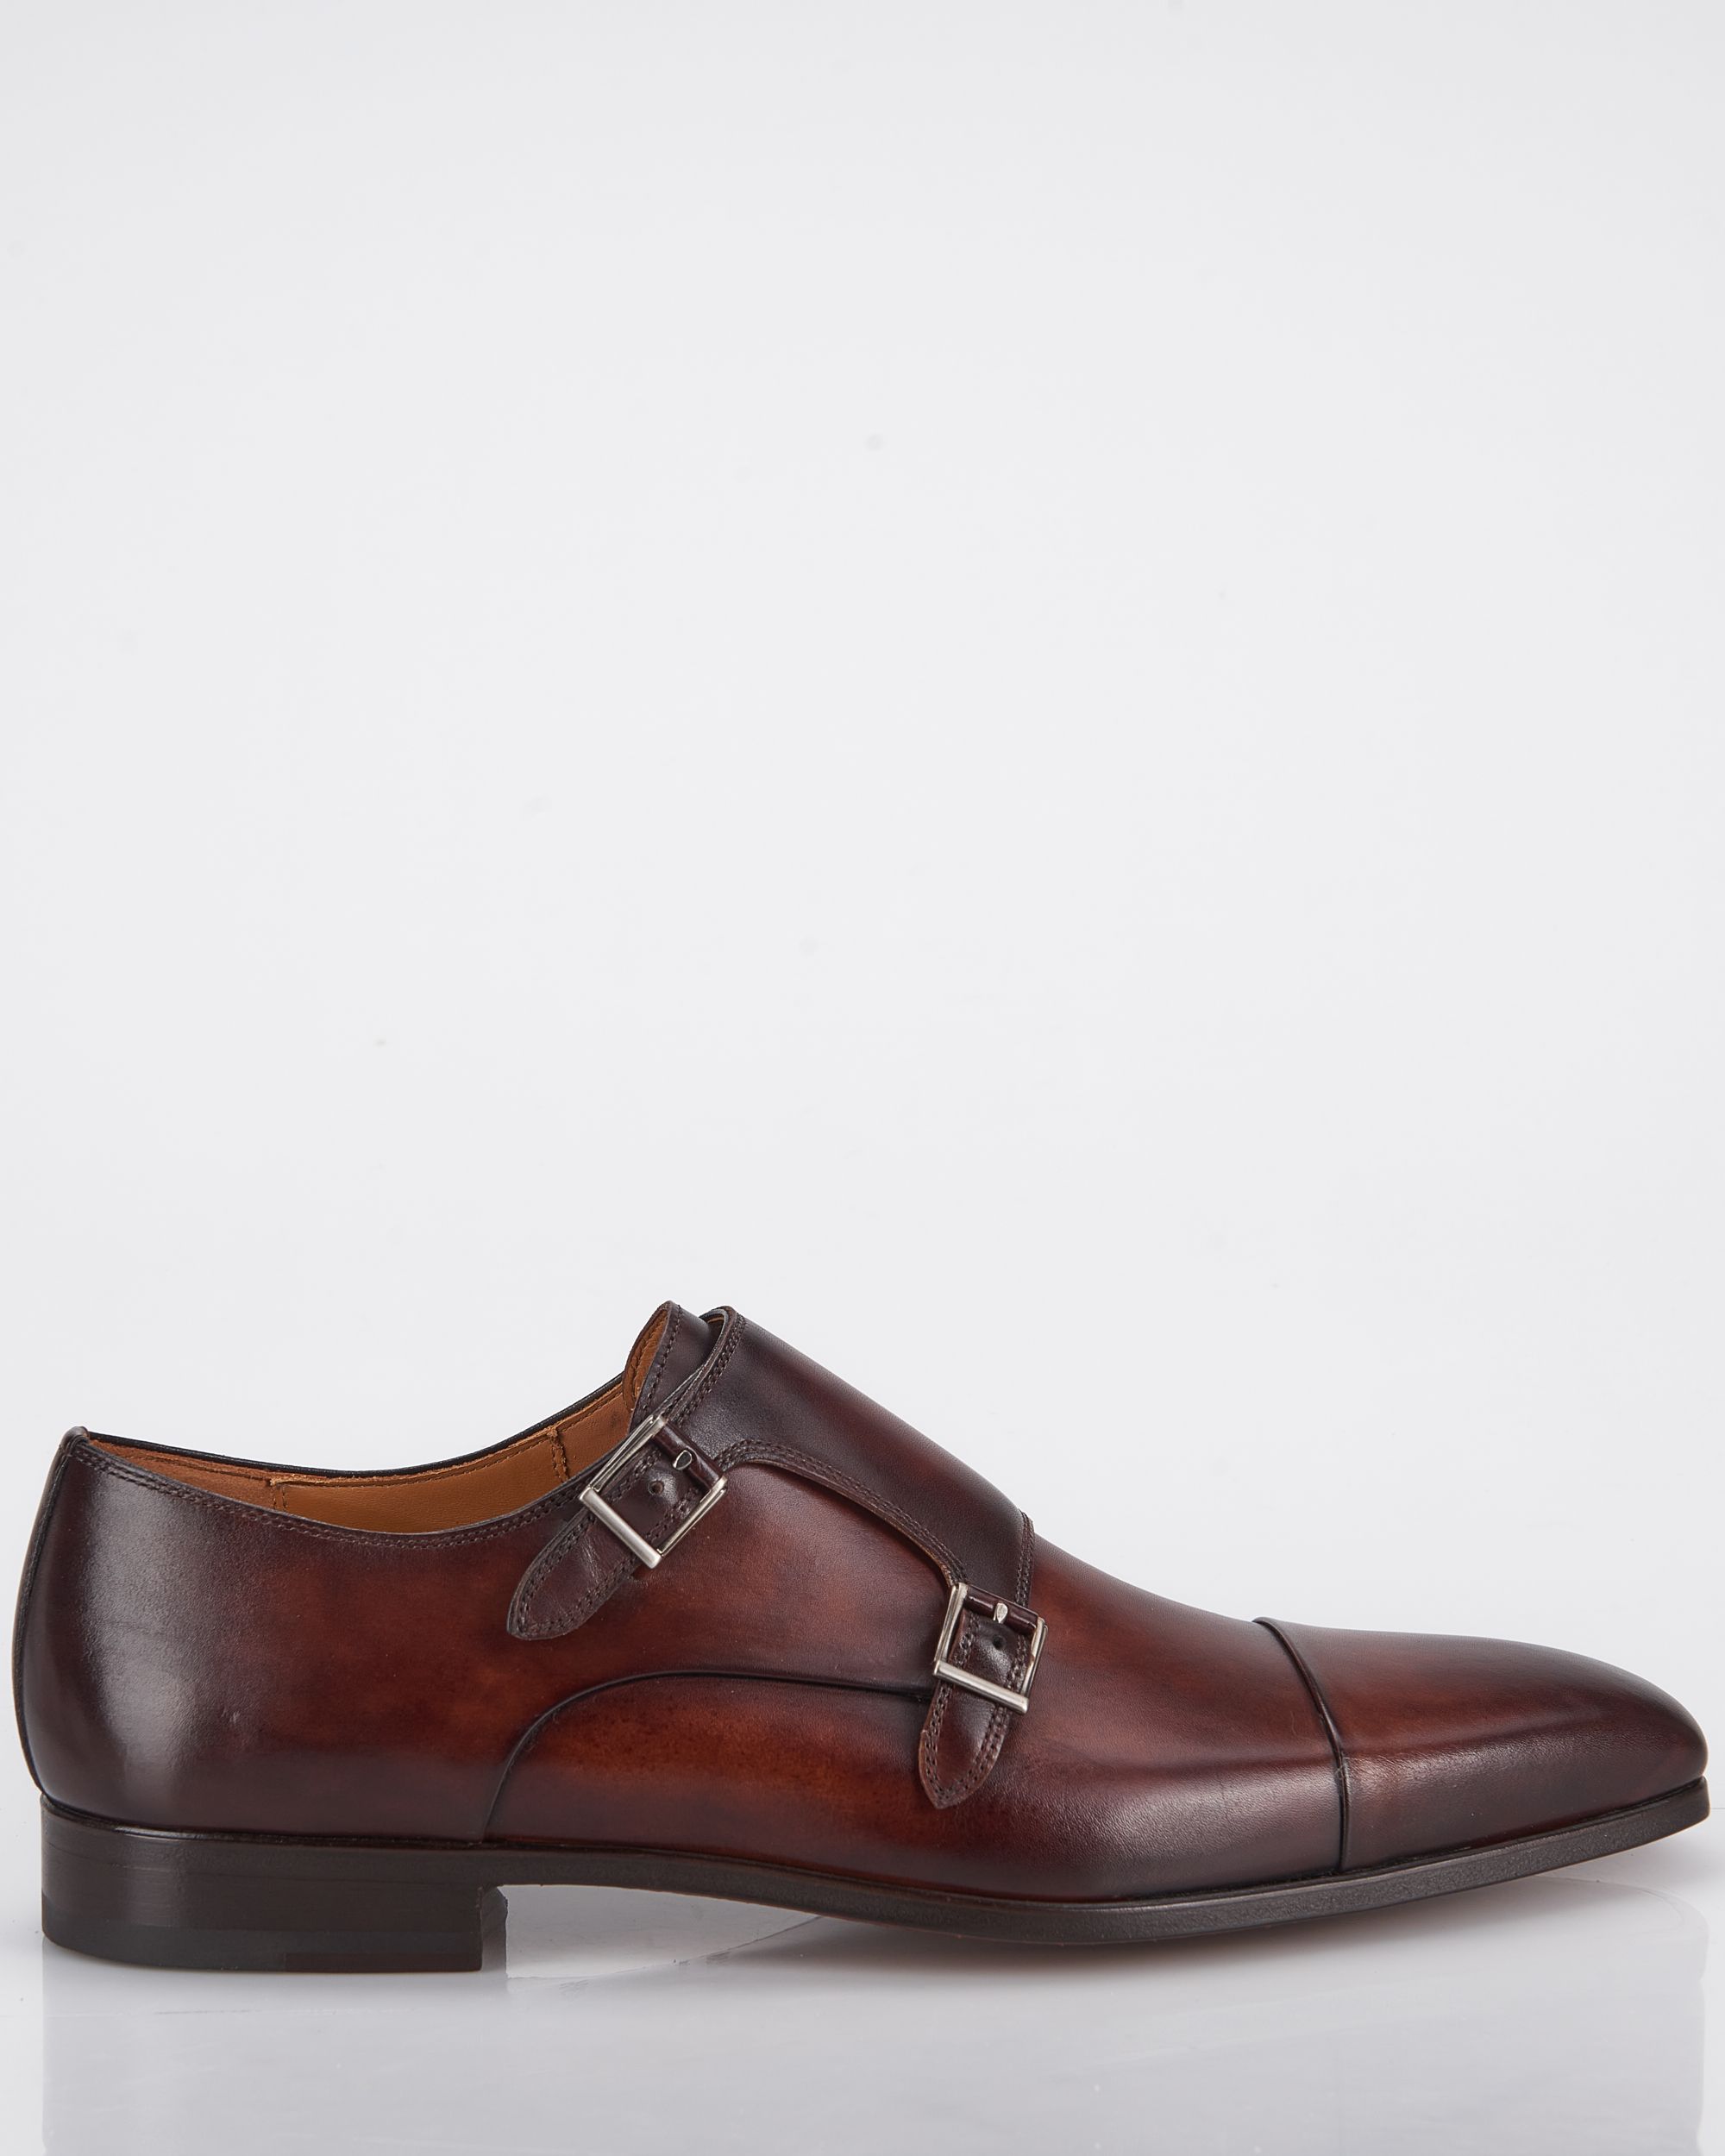 Magnanni Geklede schoenen Donker bruin 084906-001-41